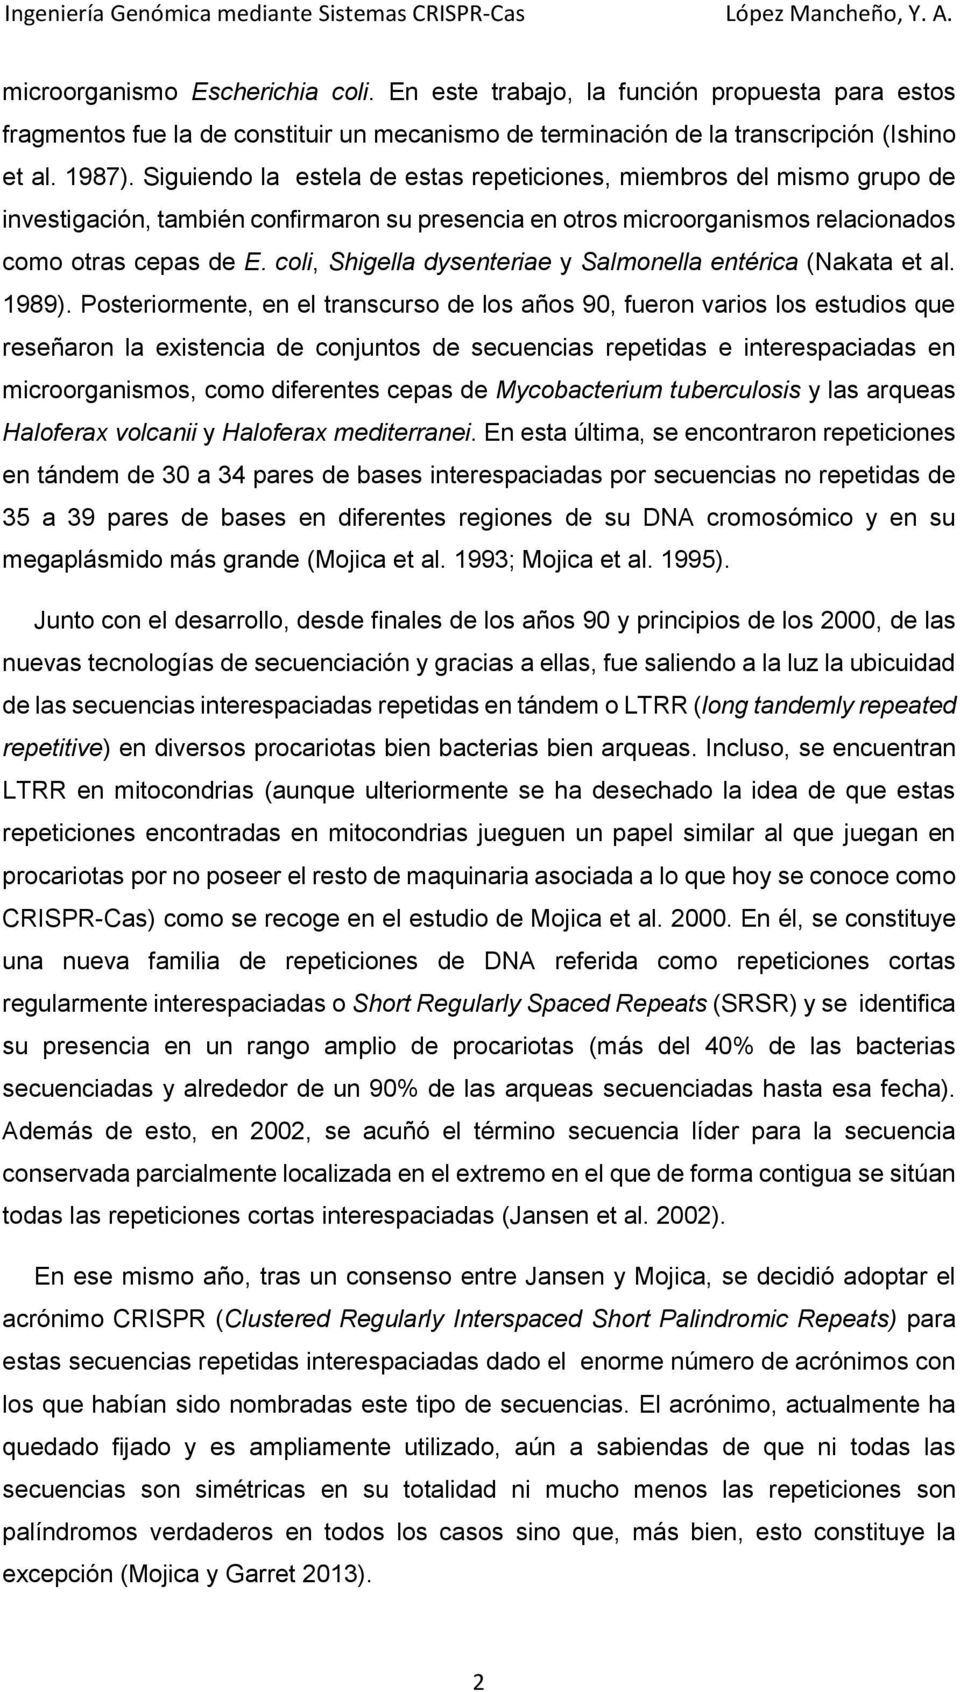 coli, Shigella dysenteriae y Salmonella entérica (Nakata et al. 1989).